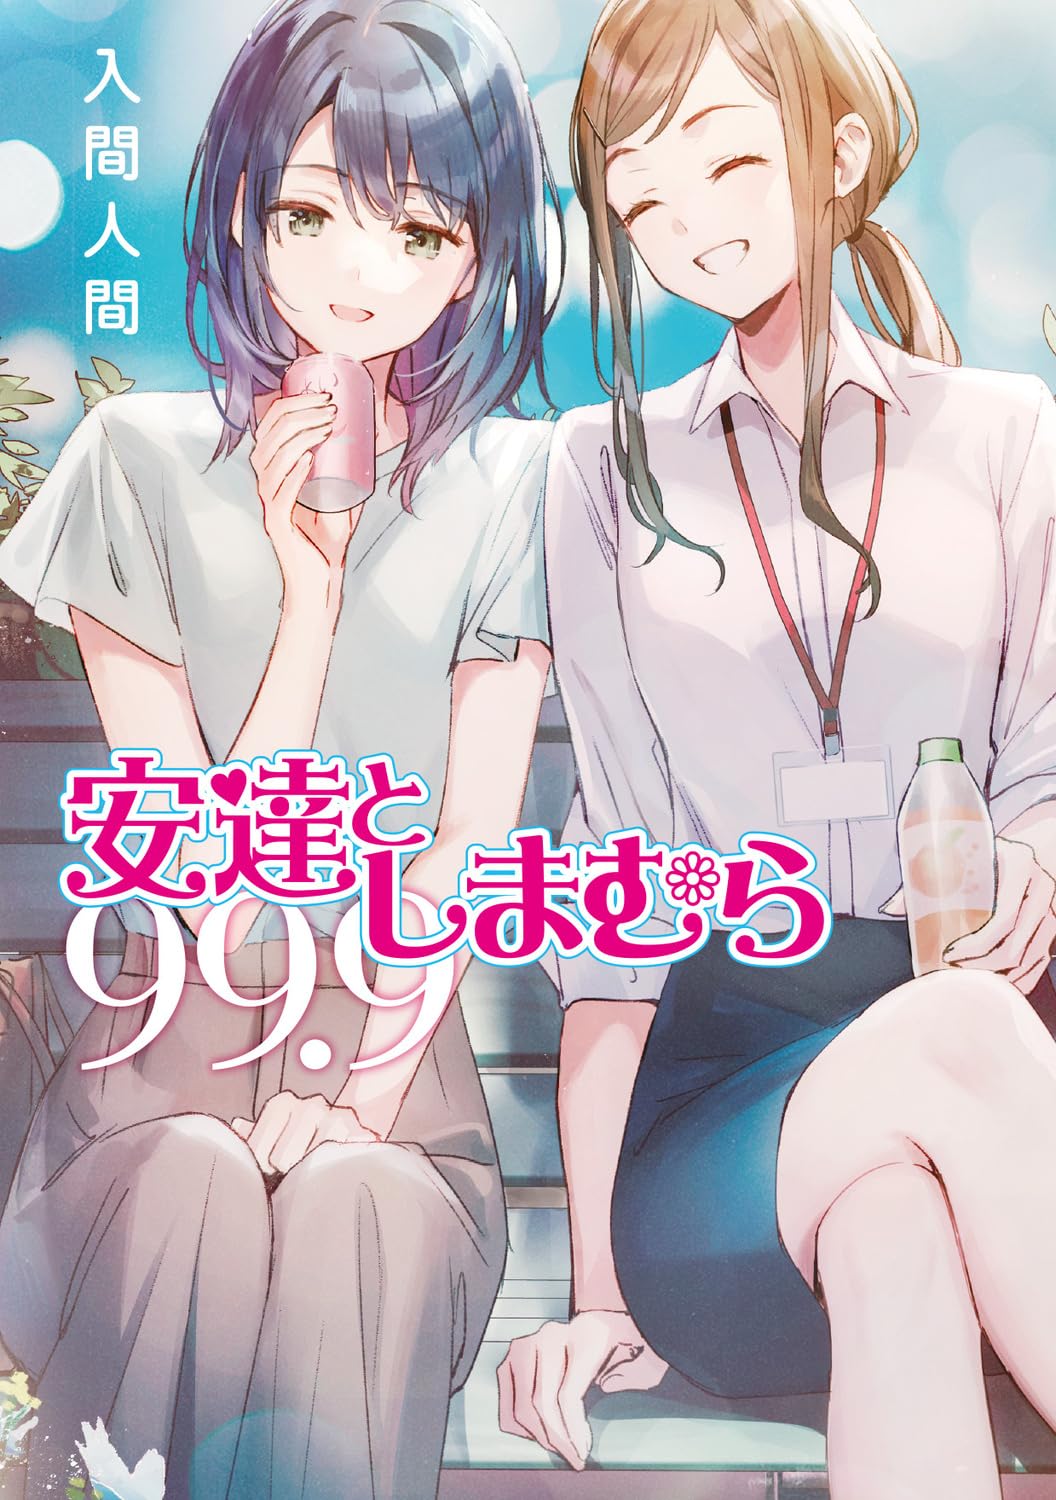 Manga (2019), Adachi to Shimamura Wiki